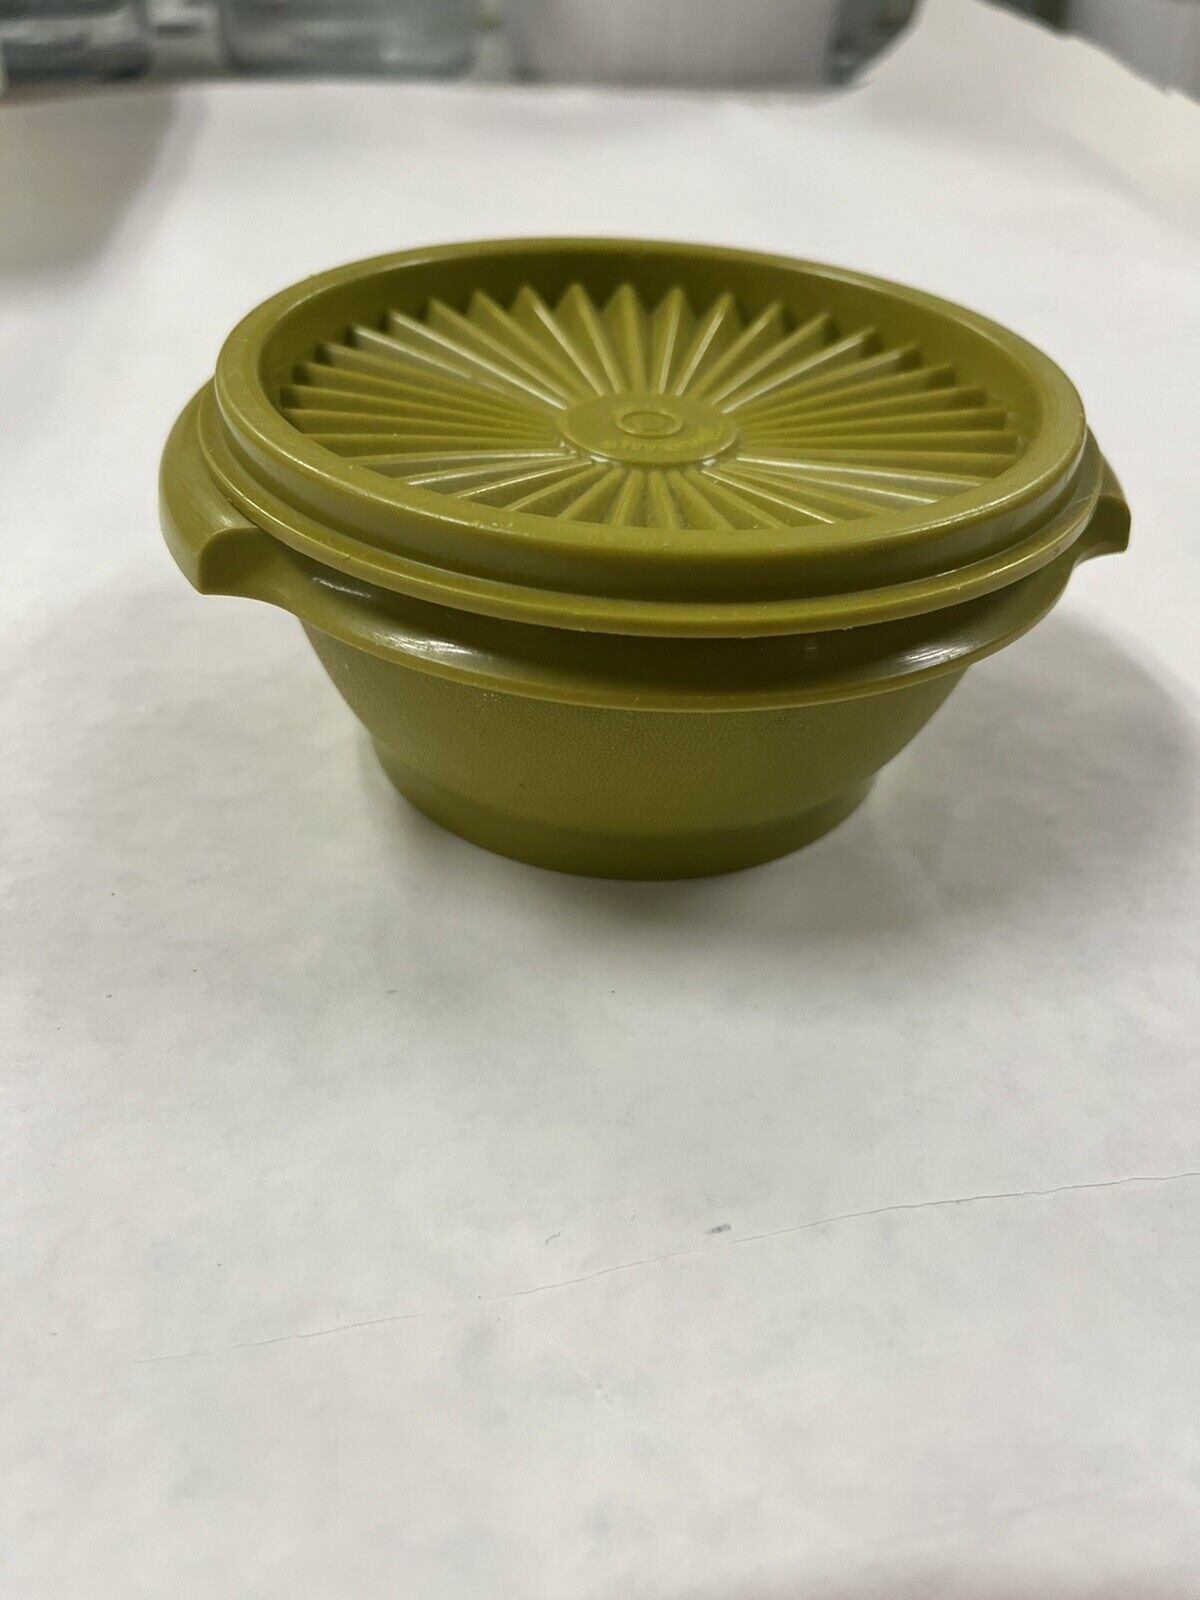 Vintage Tupperware Green Servalier Bowl #1323-15 with Lid